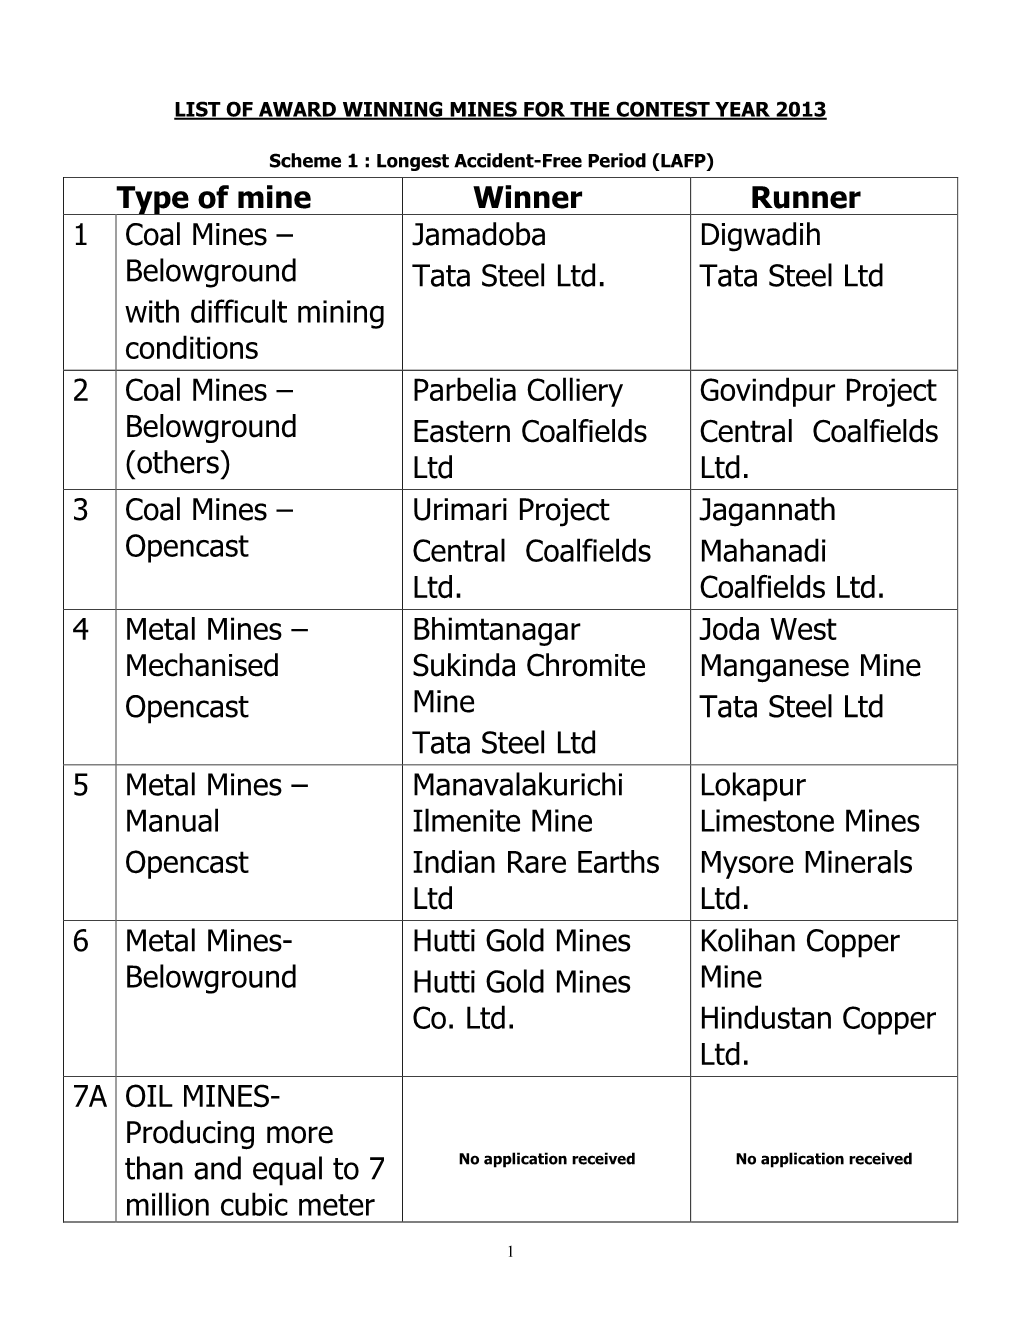 Type of Mine Winner Runner 1 Coal Mines – Belowground with Difficult